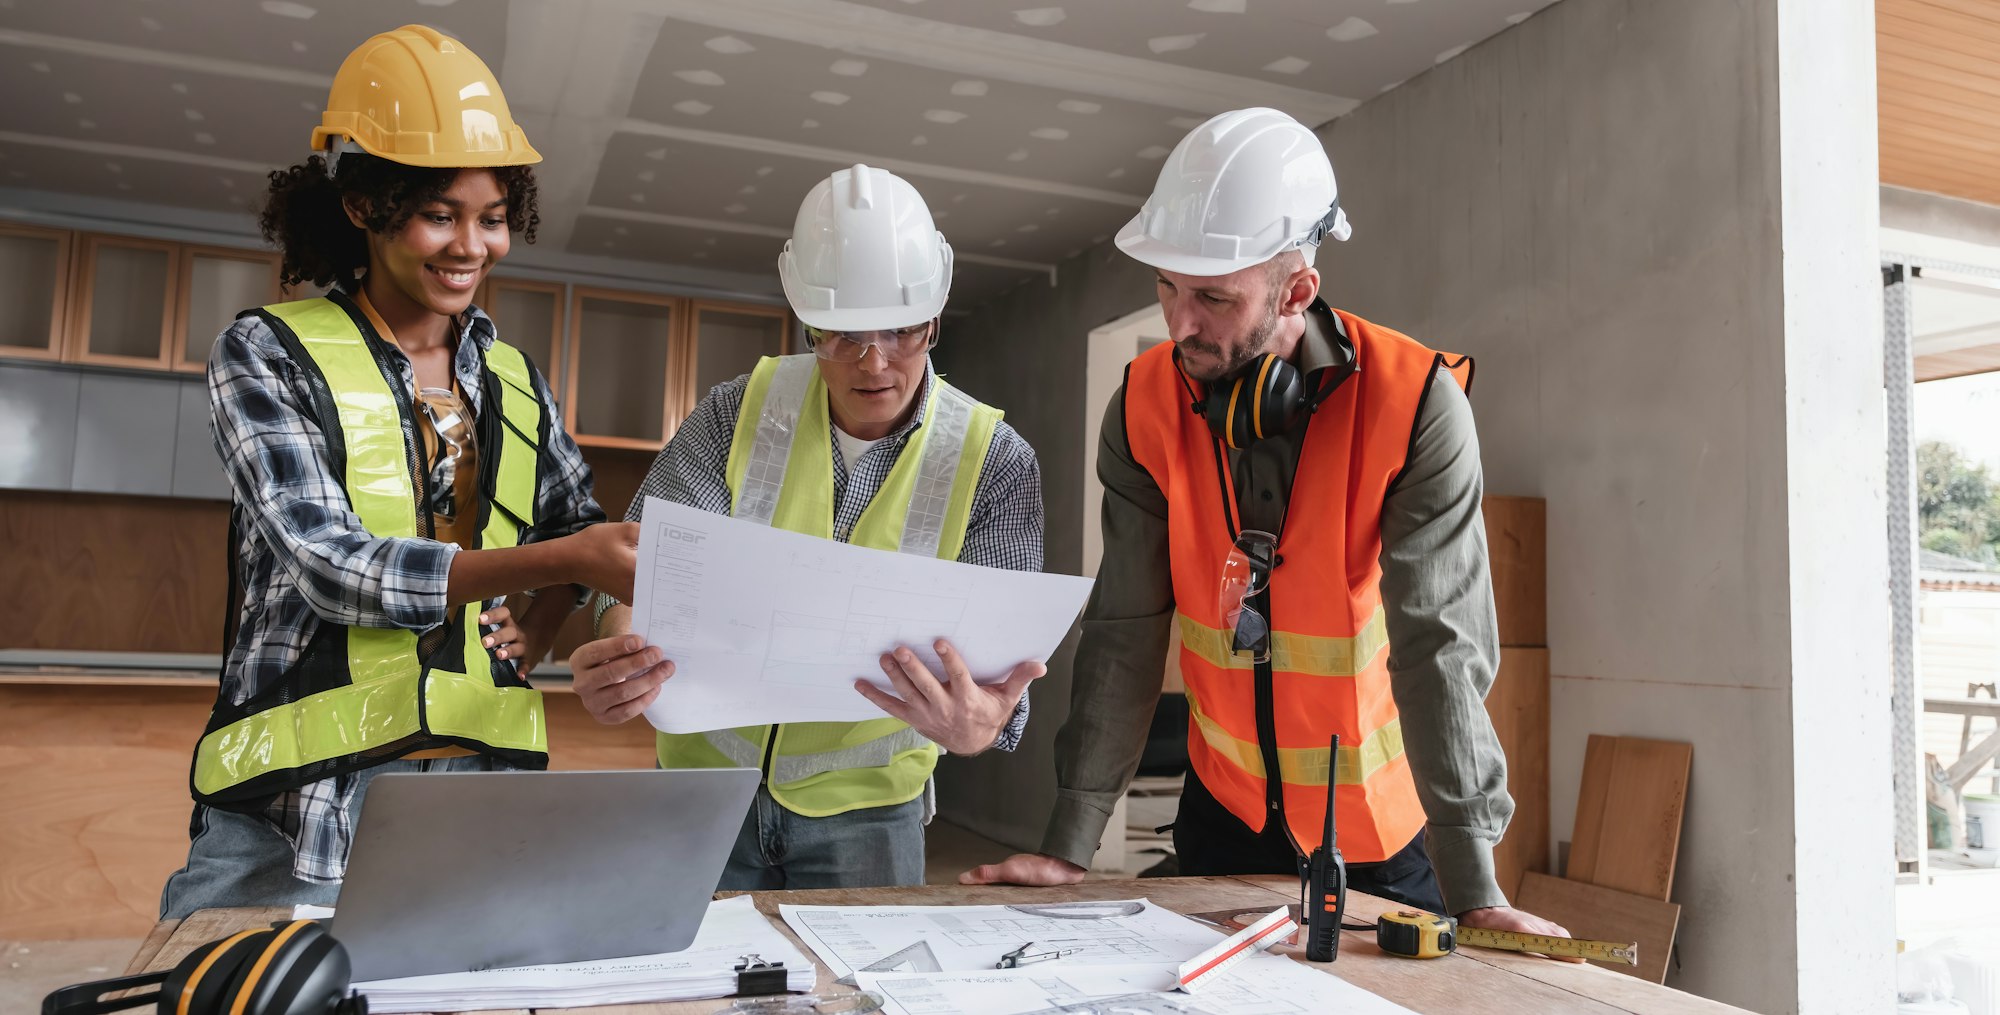 Civil engineer teams meeting working together wear worker helmets hardhat on construction site in